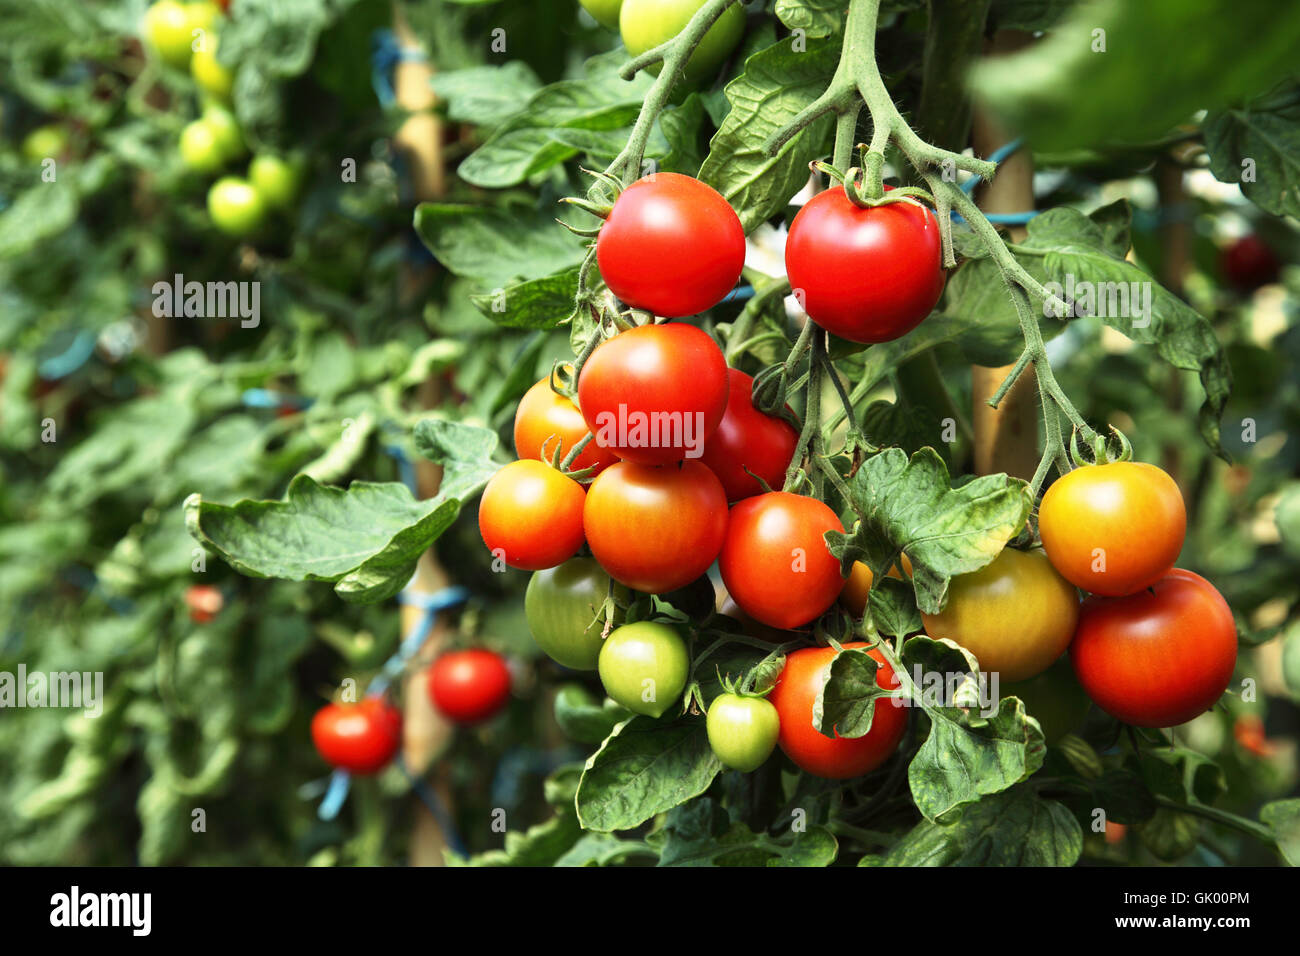 garden plant tomatoes Stock Photo